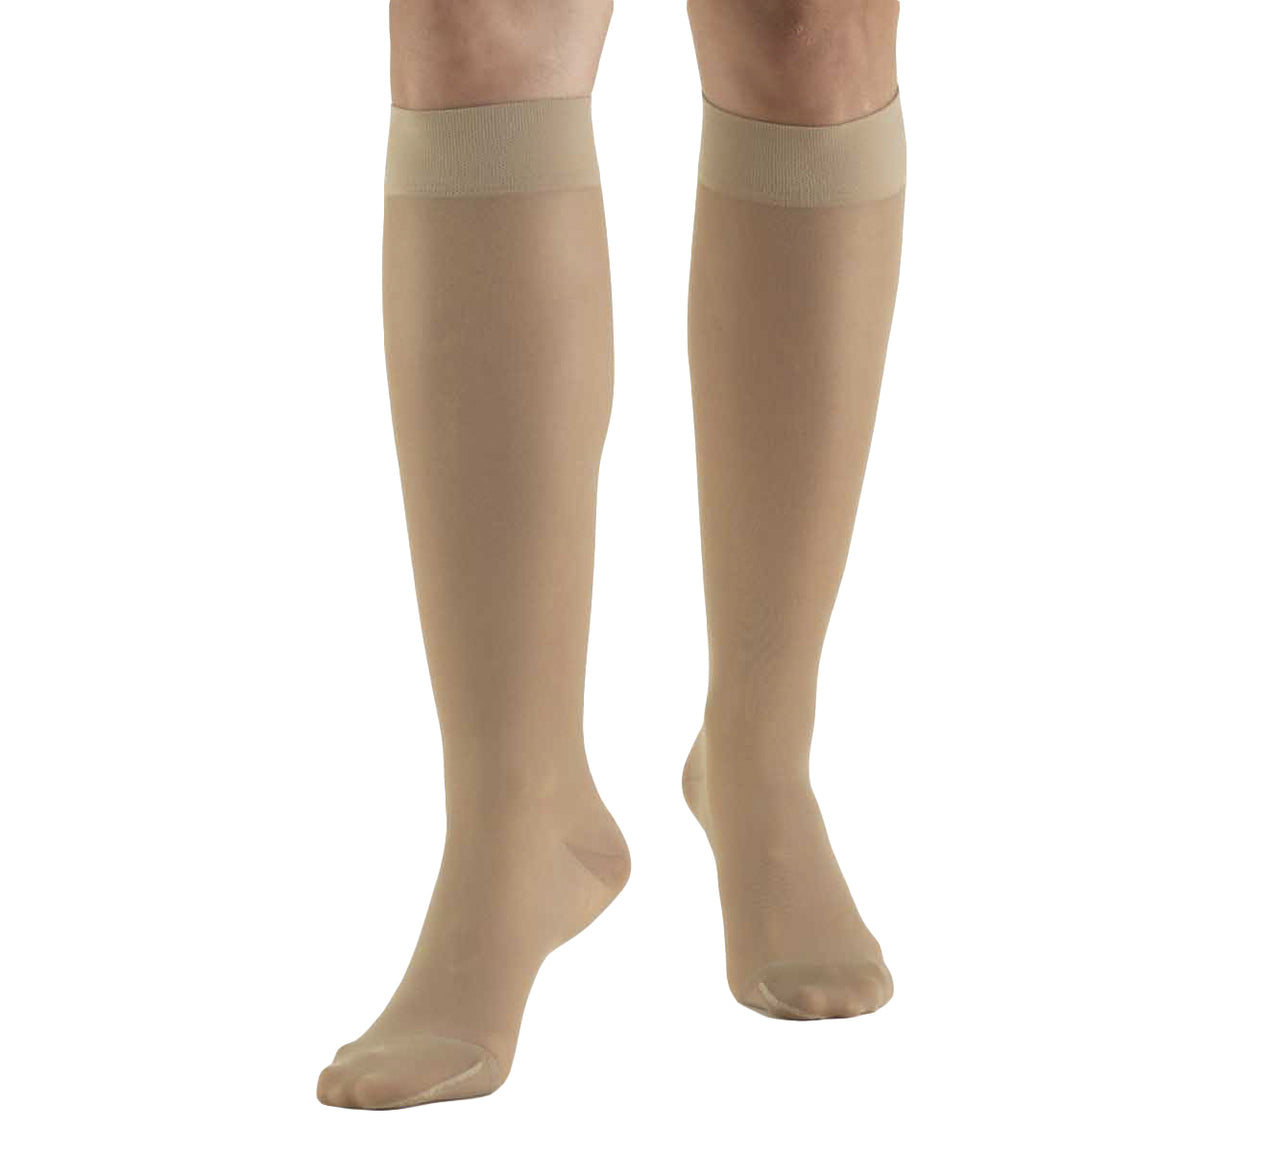  Mens Knee High 8-15 mmHg Graduated Compression SocksMild  Pressure Compression Garment